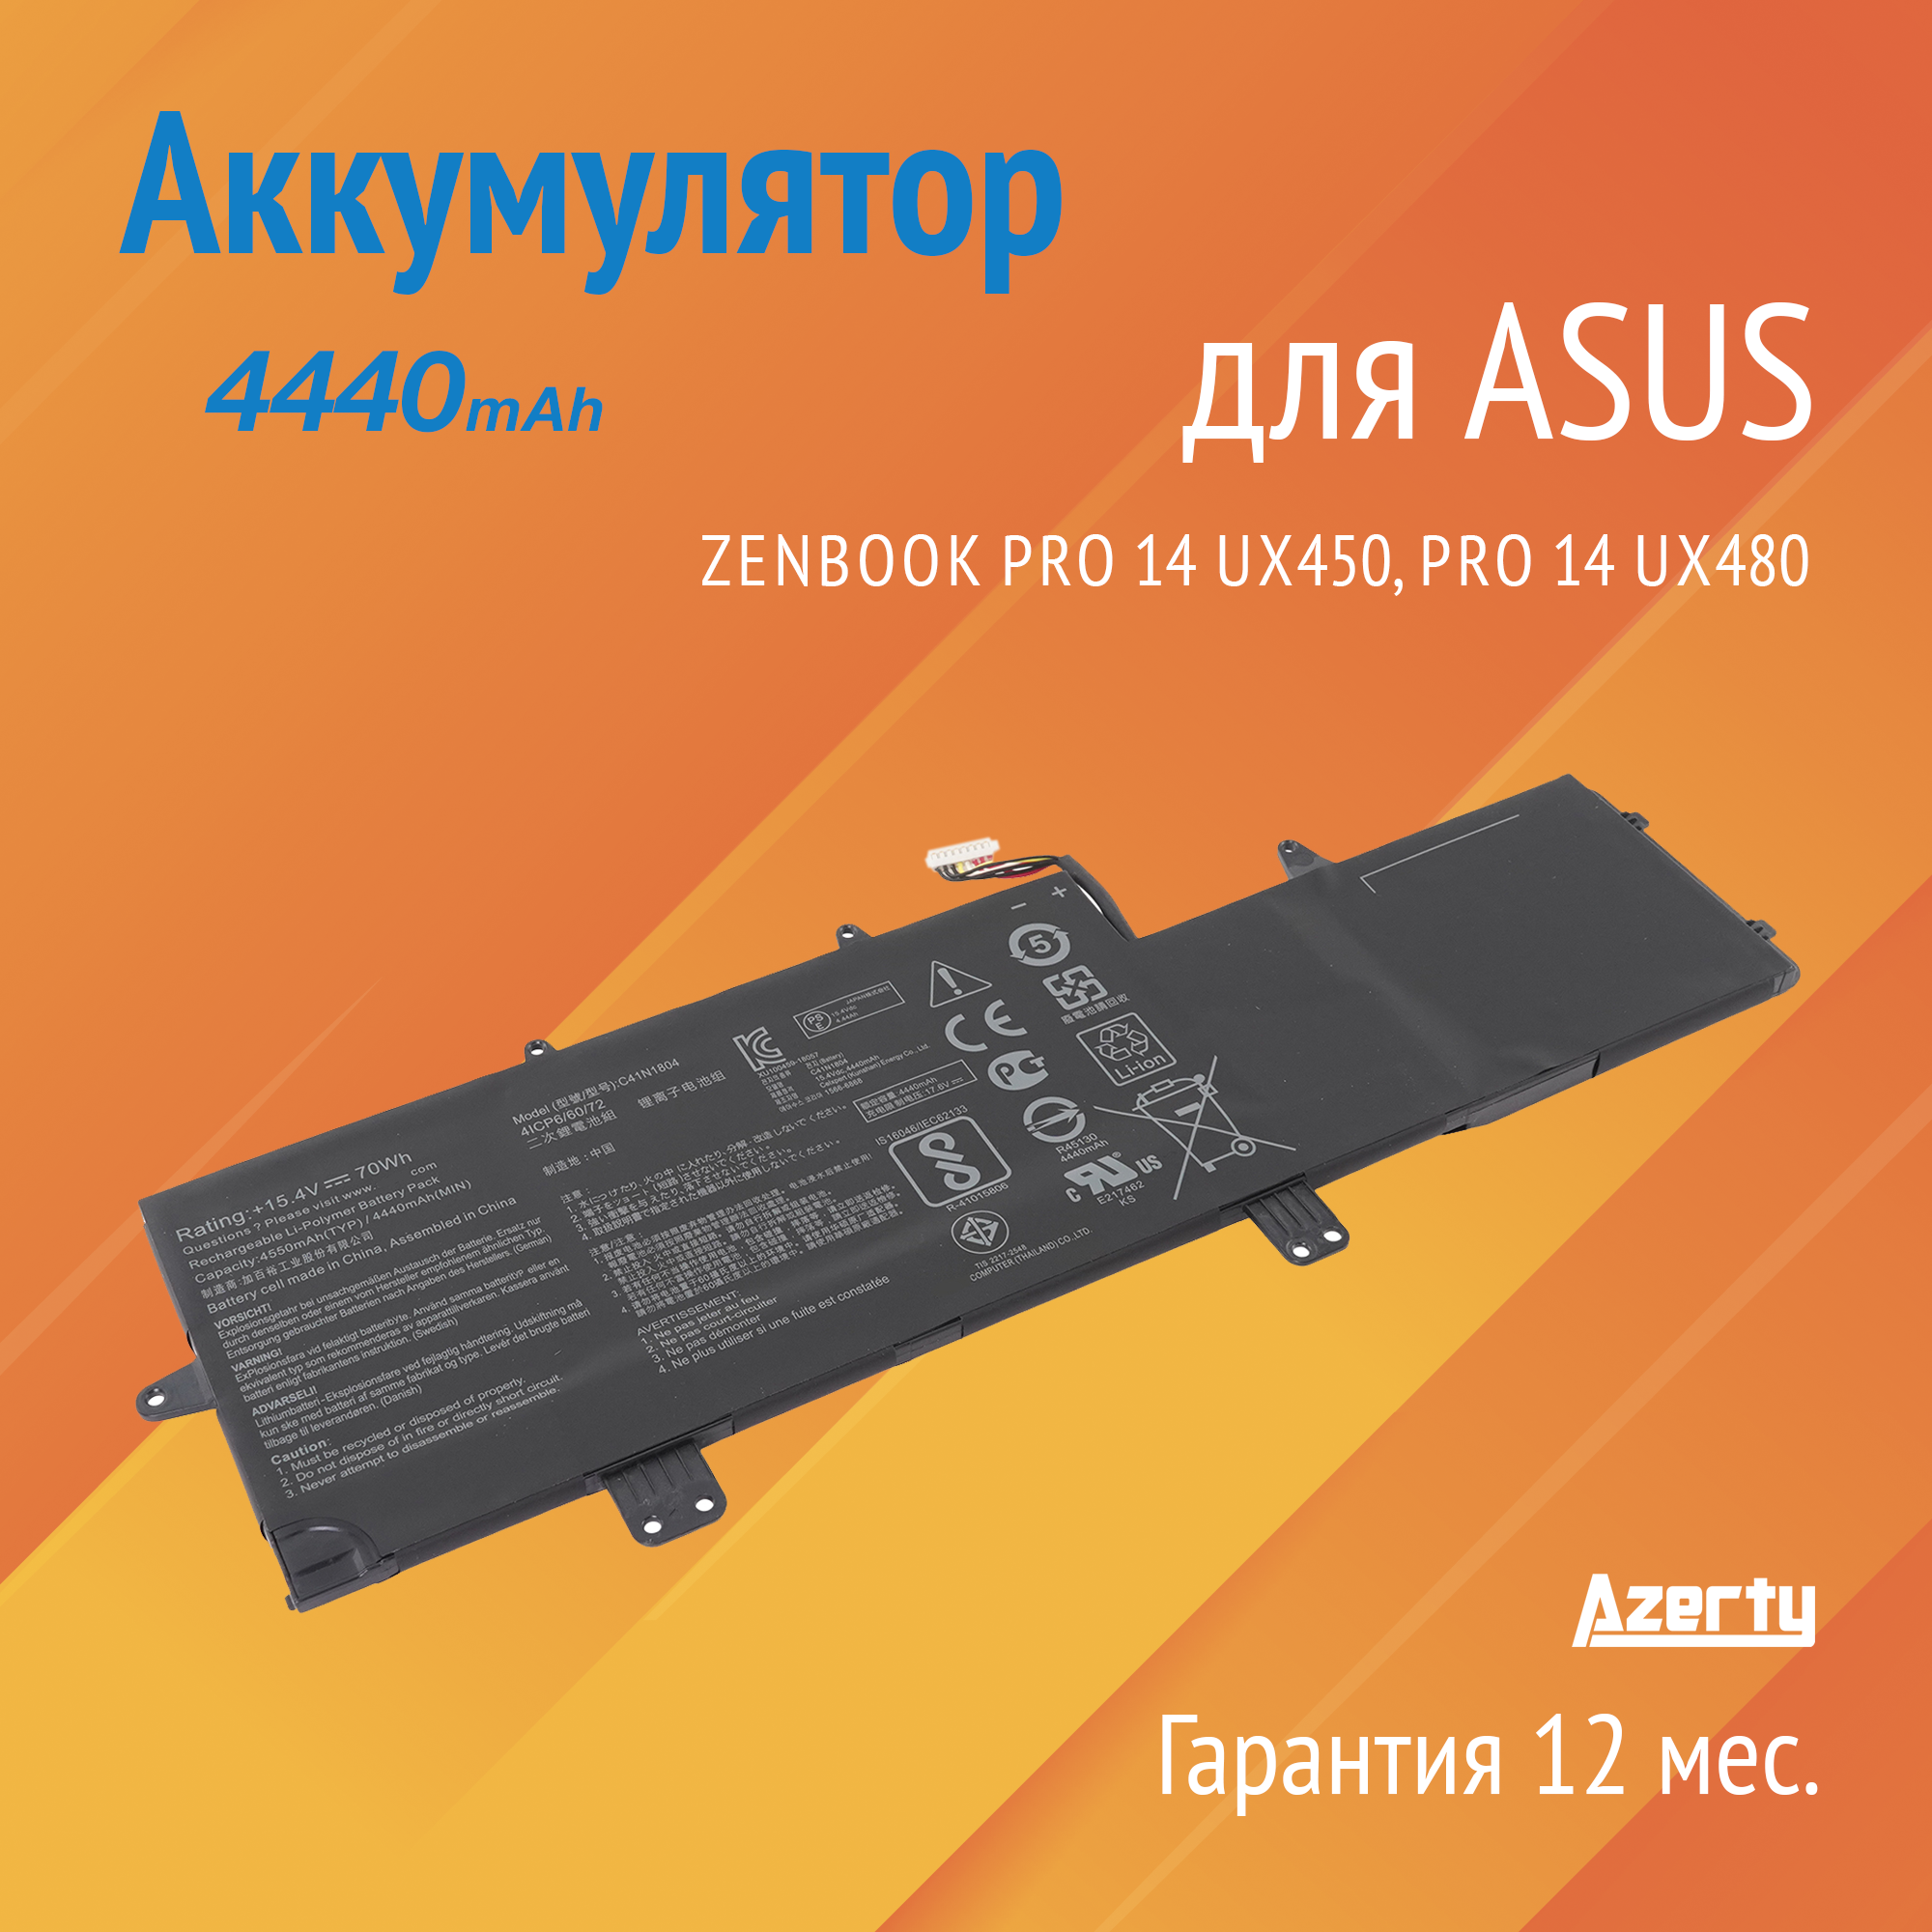 Аккумулятор C41N1804 для Asus ZenBook Pro 14 UX450 / Pro 14 UX480